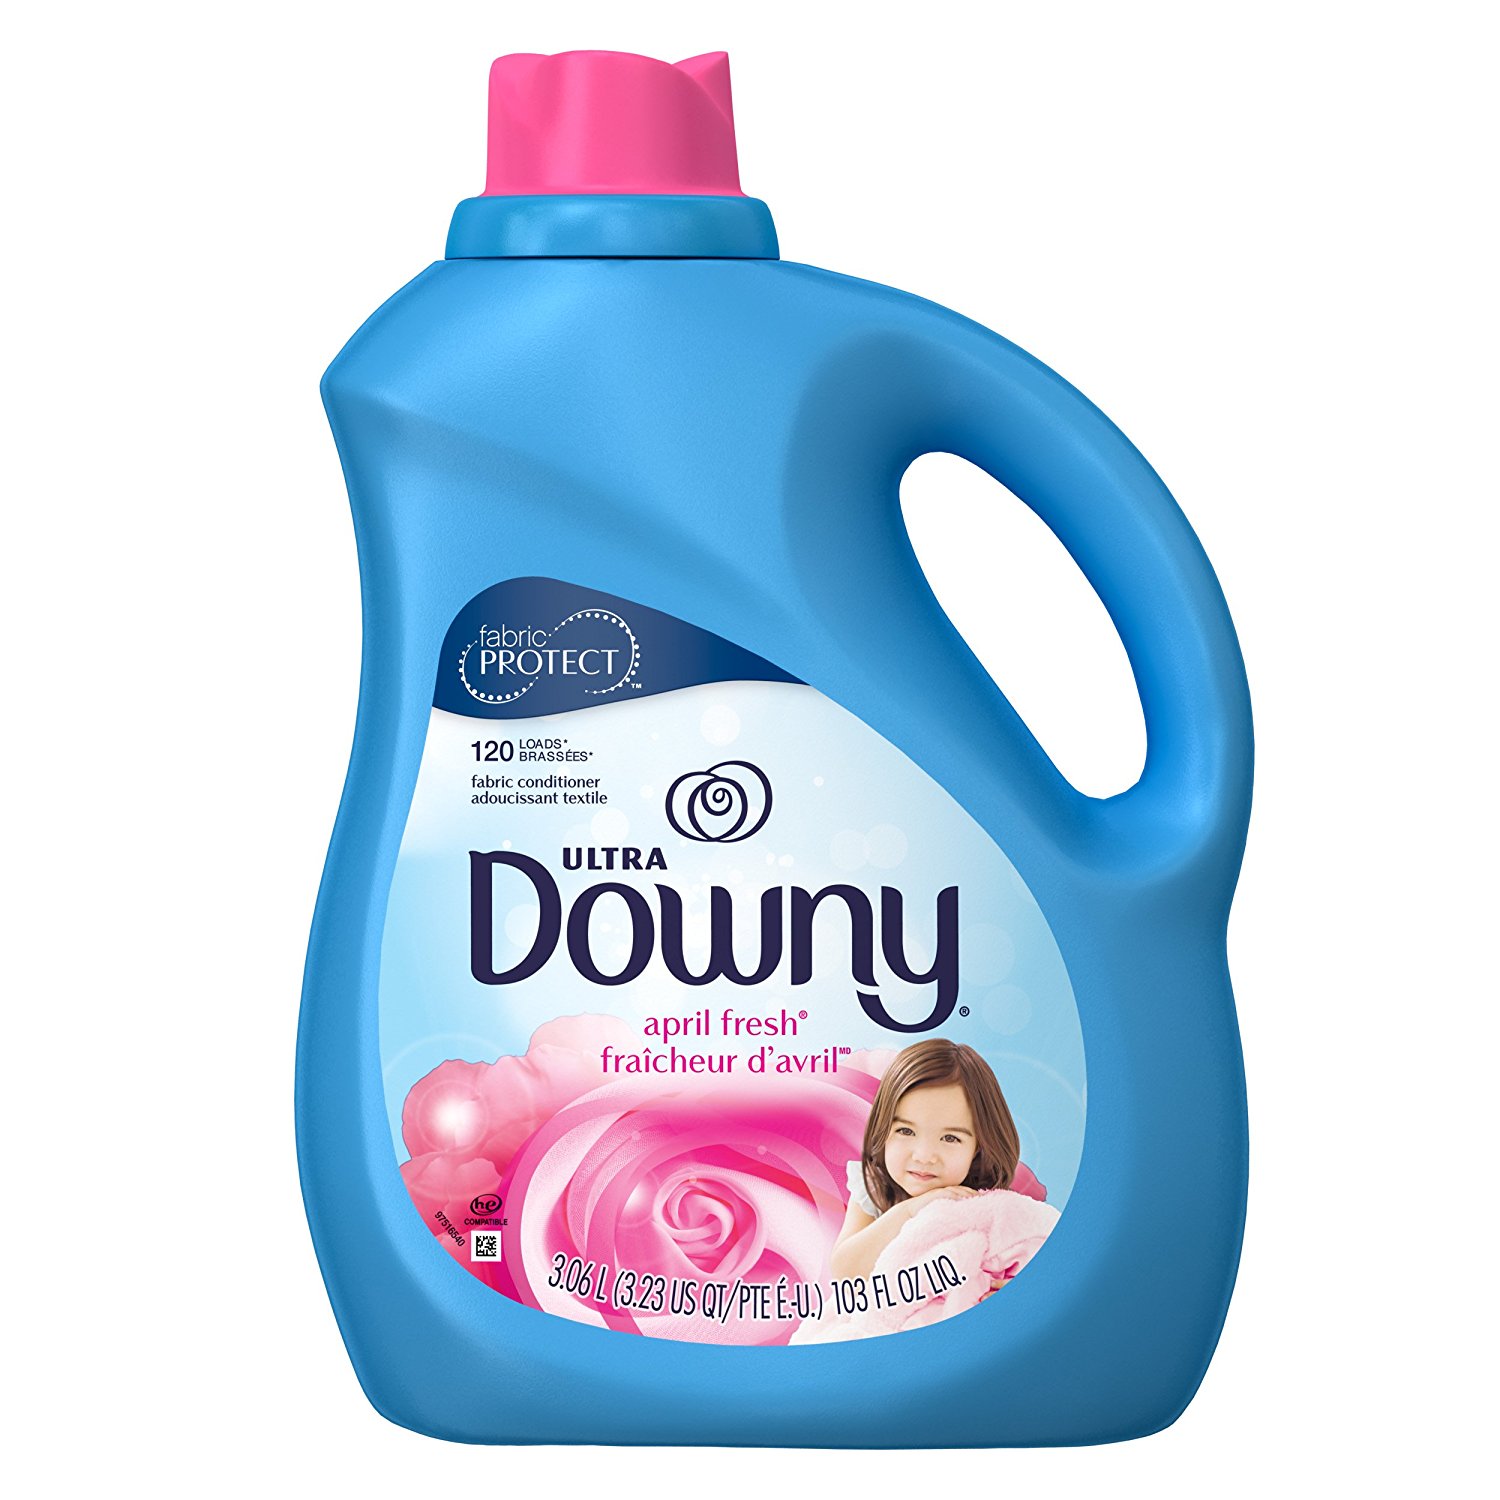 downy detergent